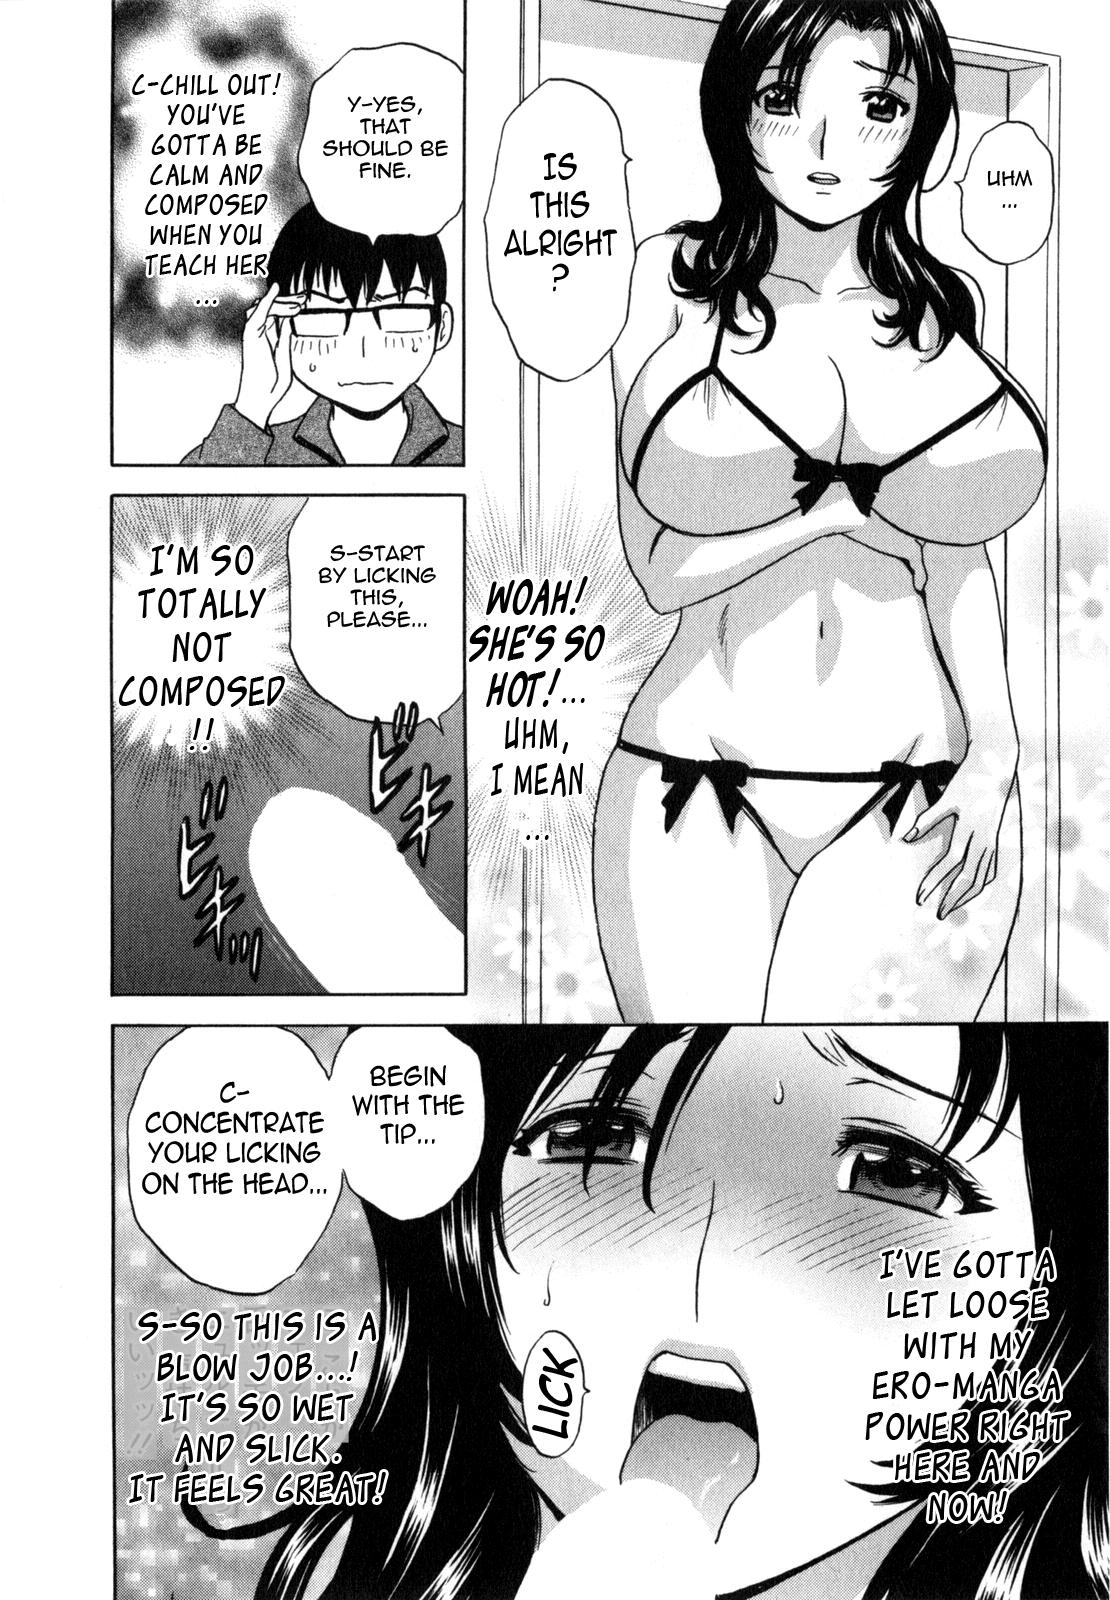 [Hidemaru] Life with Married Women Just Like a Manga 1 - Ch. 1-5 [English] {Tadanohito} 17